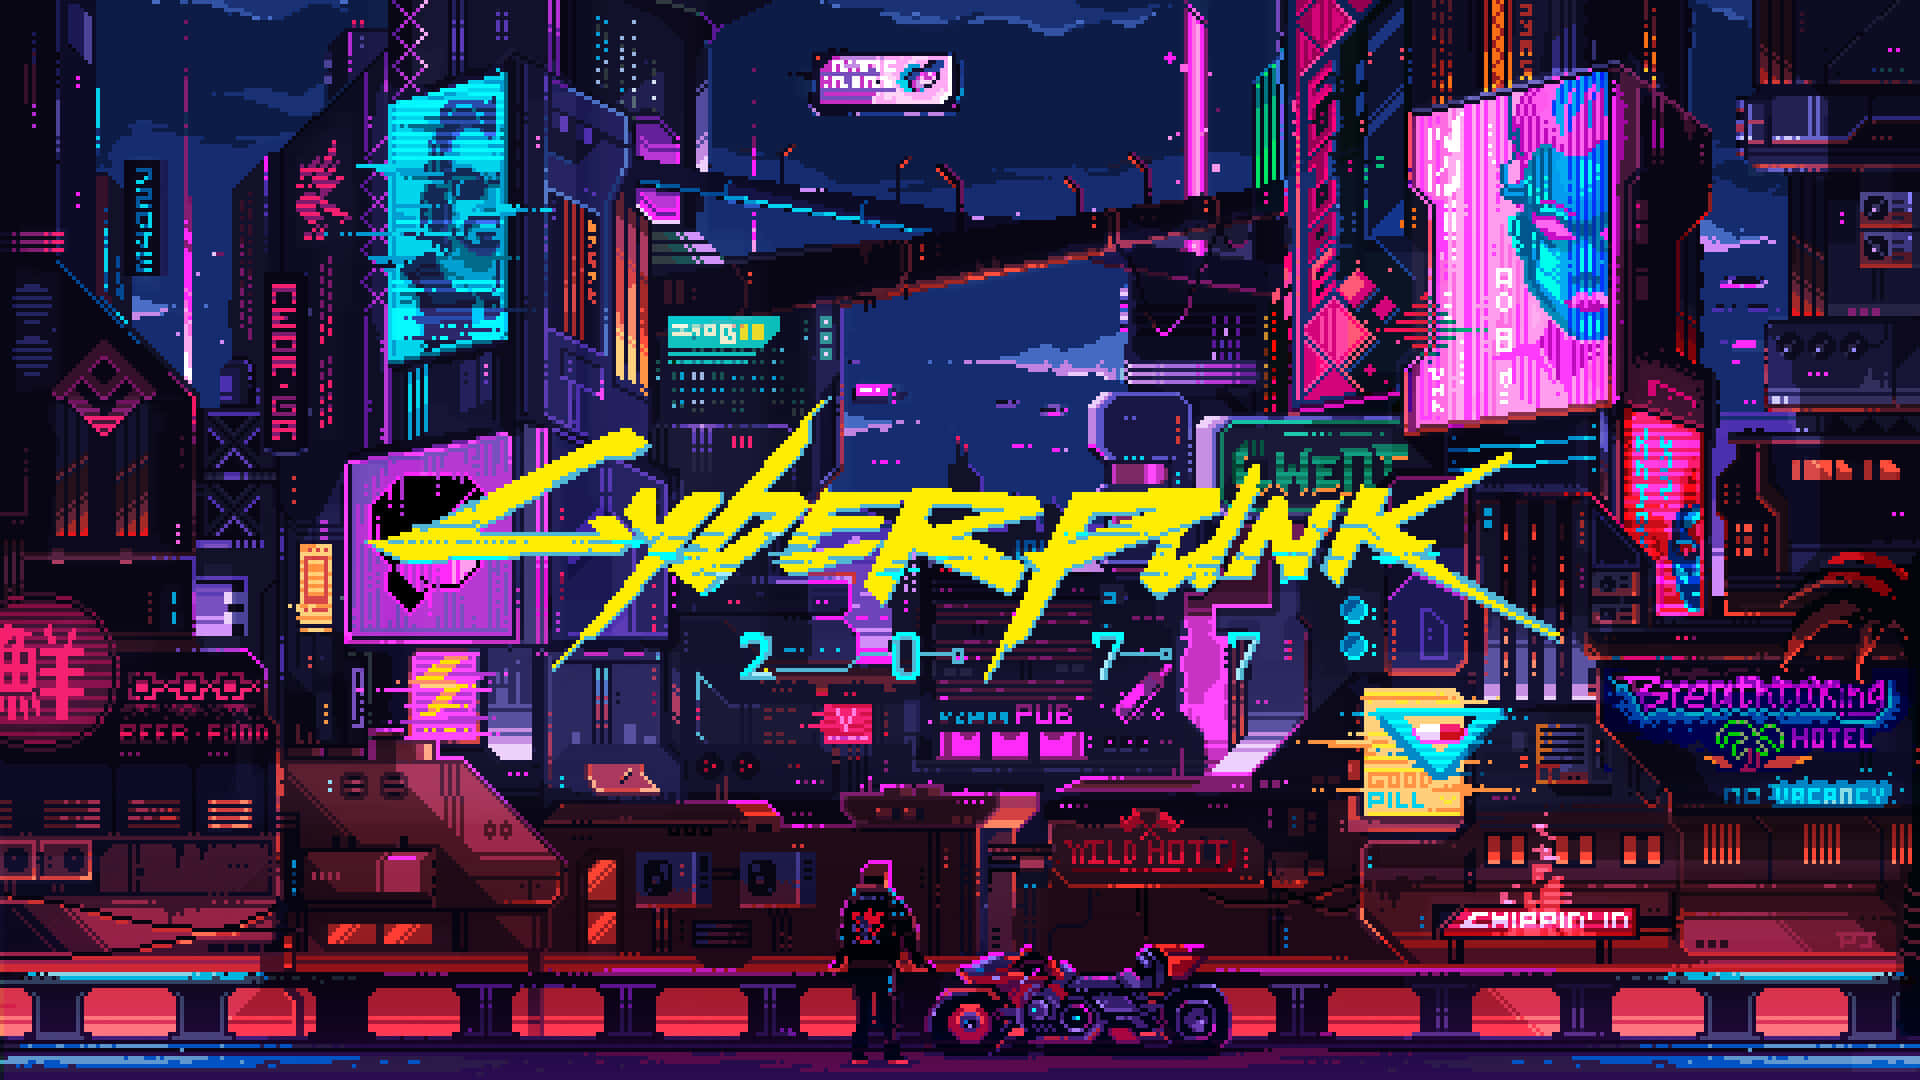 Cyberpunk 1920x1080 Wallpapers - Top Free Cyberpunk 1920x1080